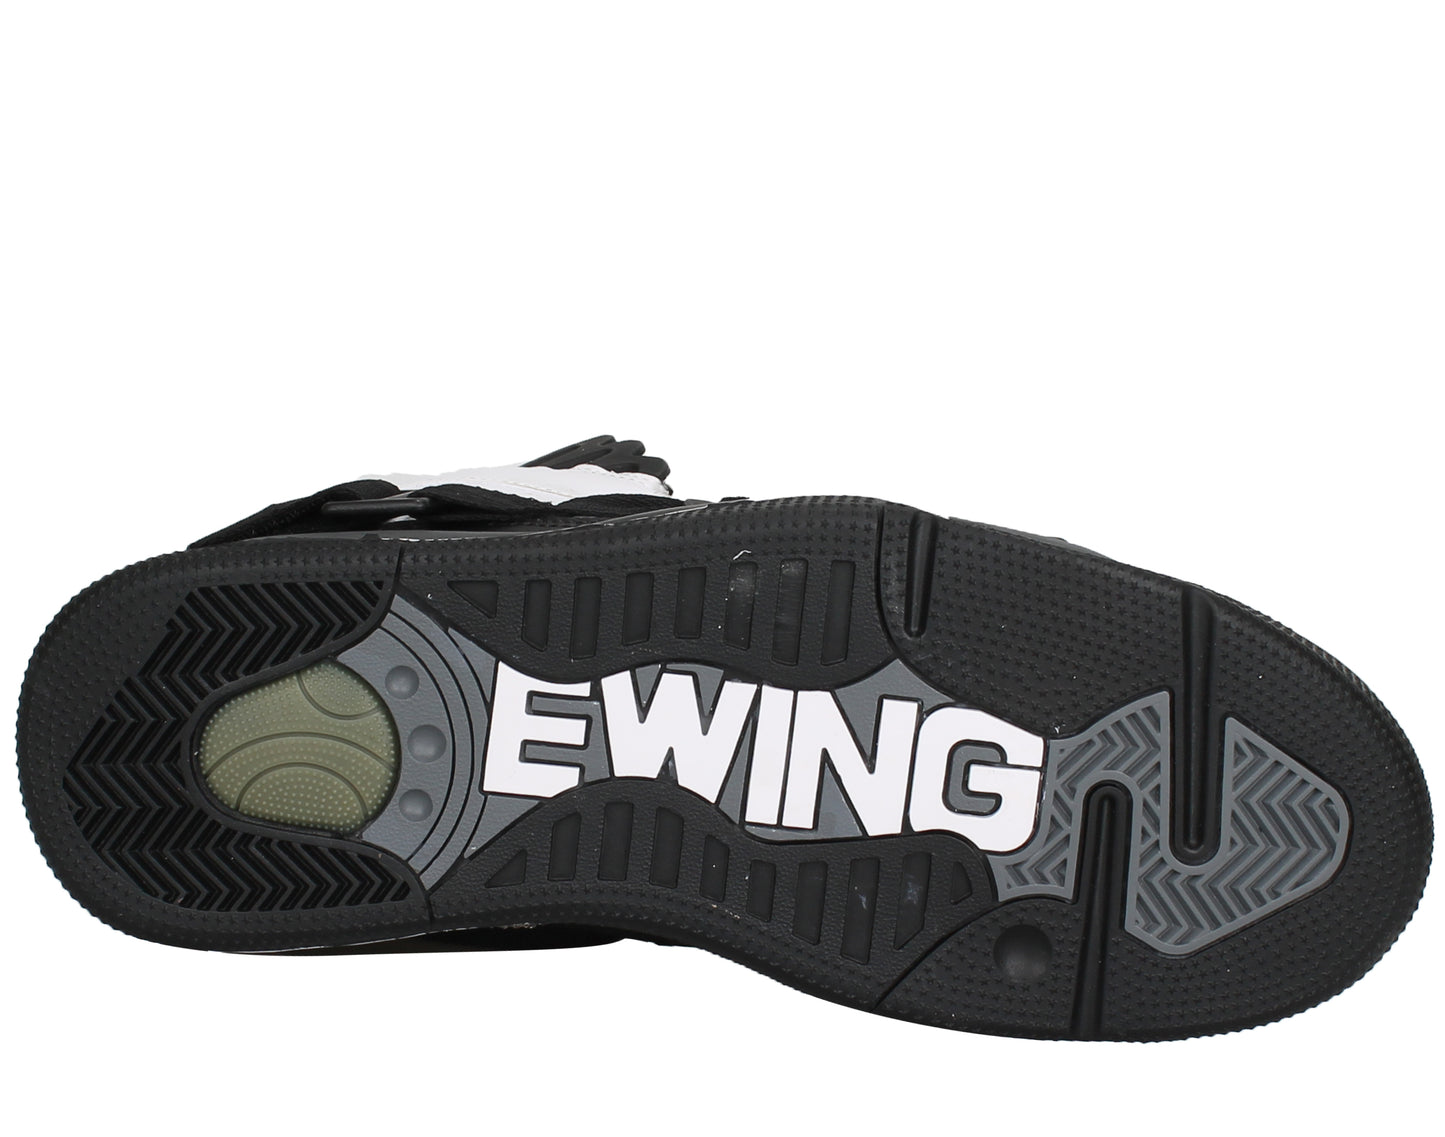 Ewing Athletics Ewing Concept Hi Men's Basketball Shoes